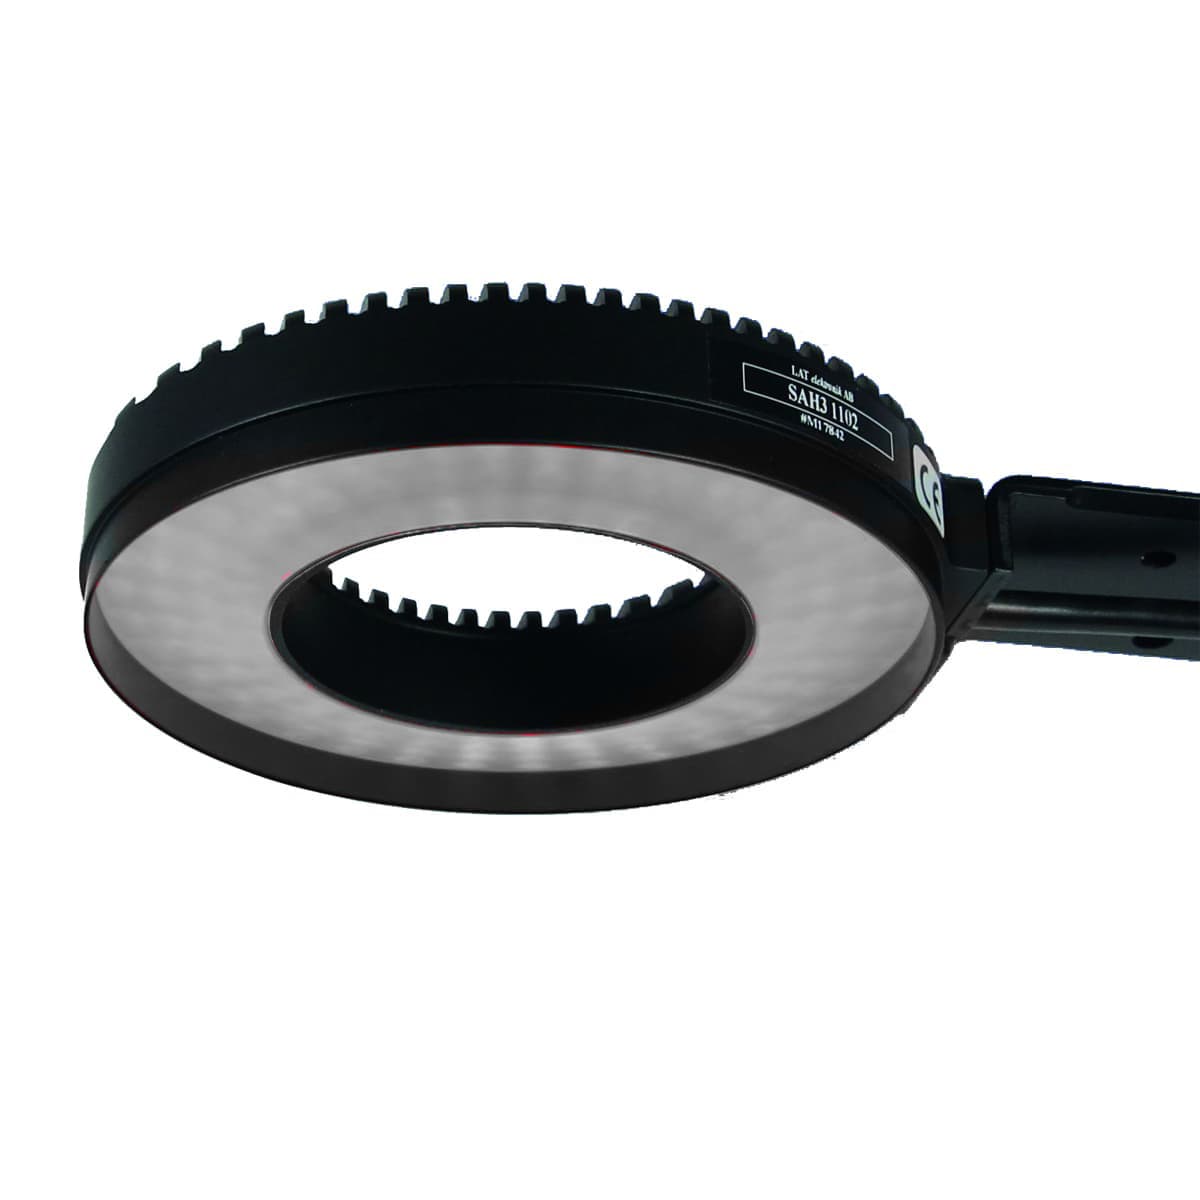 SAW3 1102 LATAB LED Ring Light,102mm,W